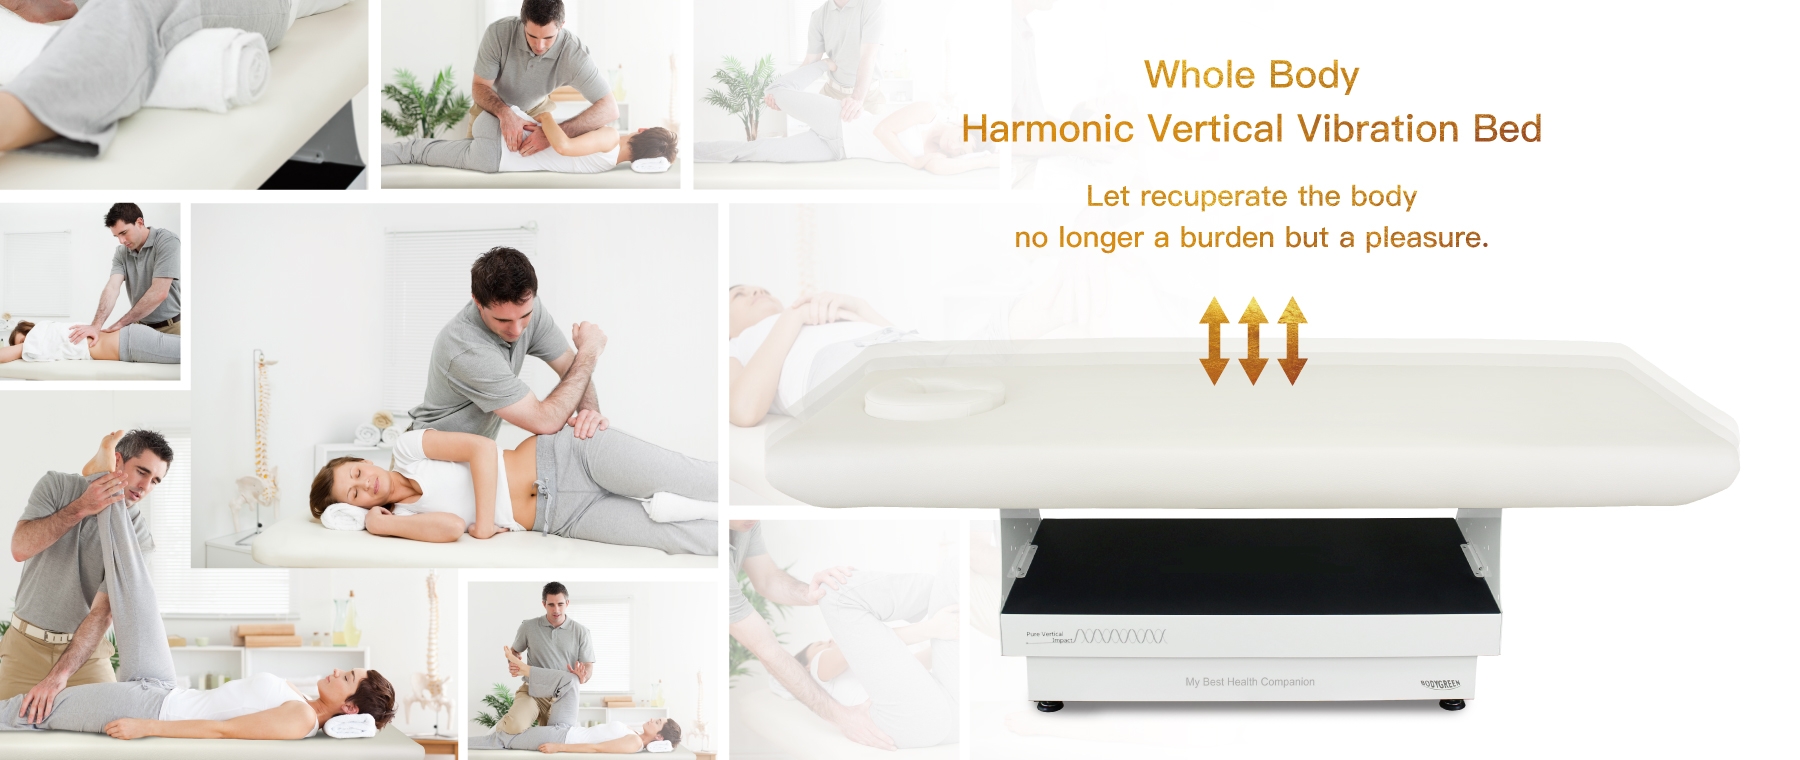 Whole Body Harmonic Vertical Vibration Bed